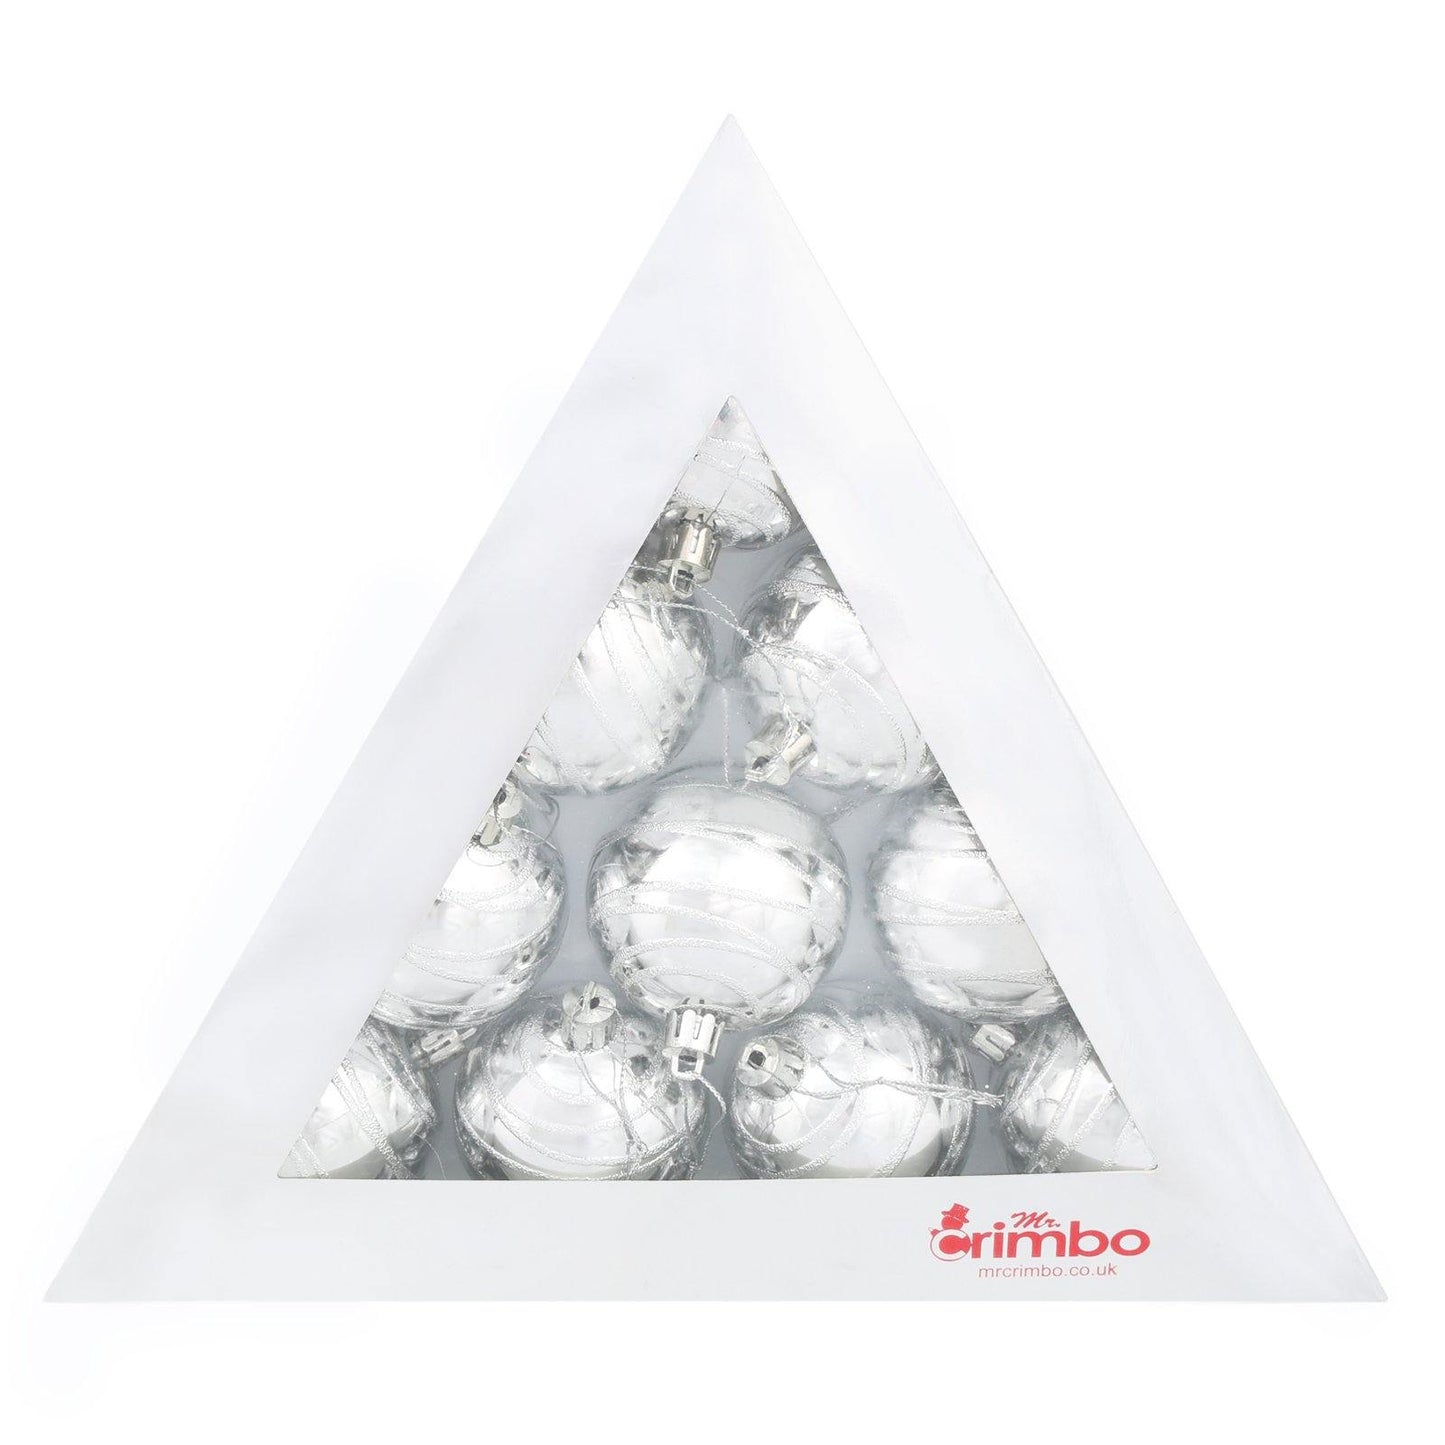 Mr Crimbo 10 x 6cm Mirrored Swirl Christmas Tree Baubles - MrCrimbo.co.uk -XS5706 - Silver -Baubles